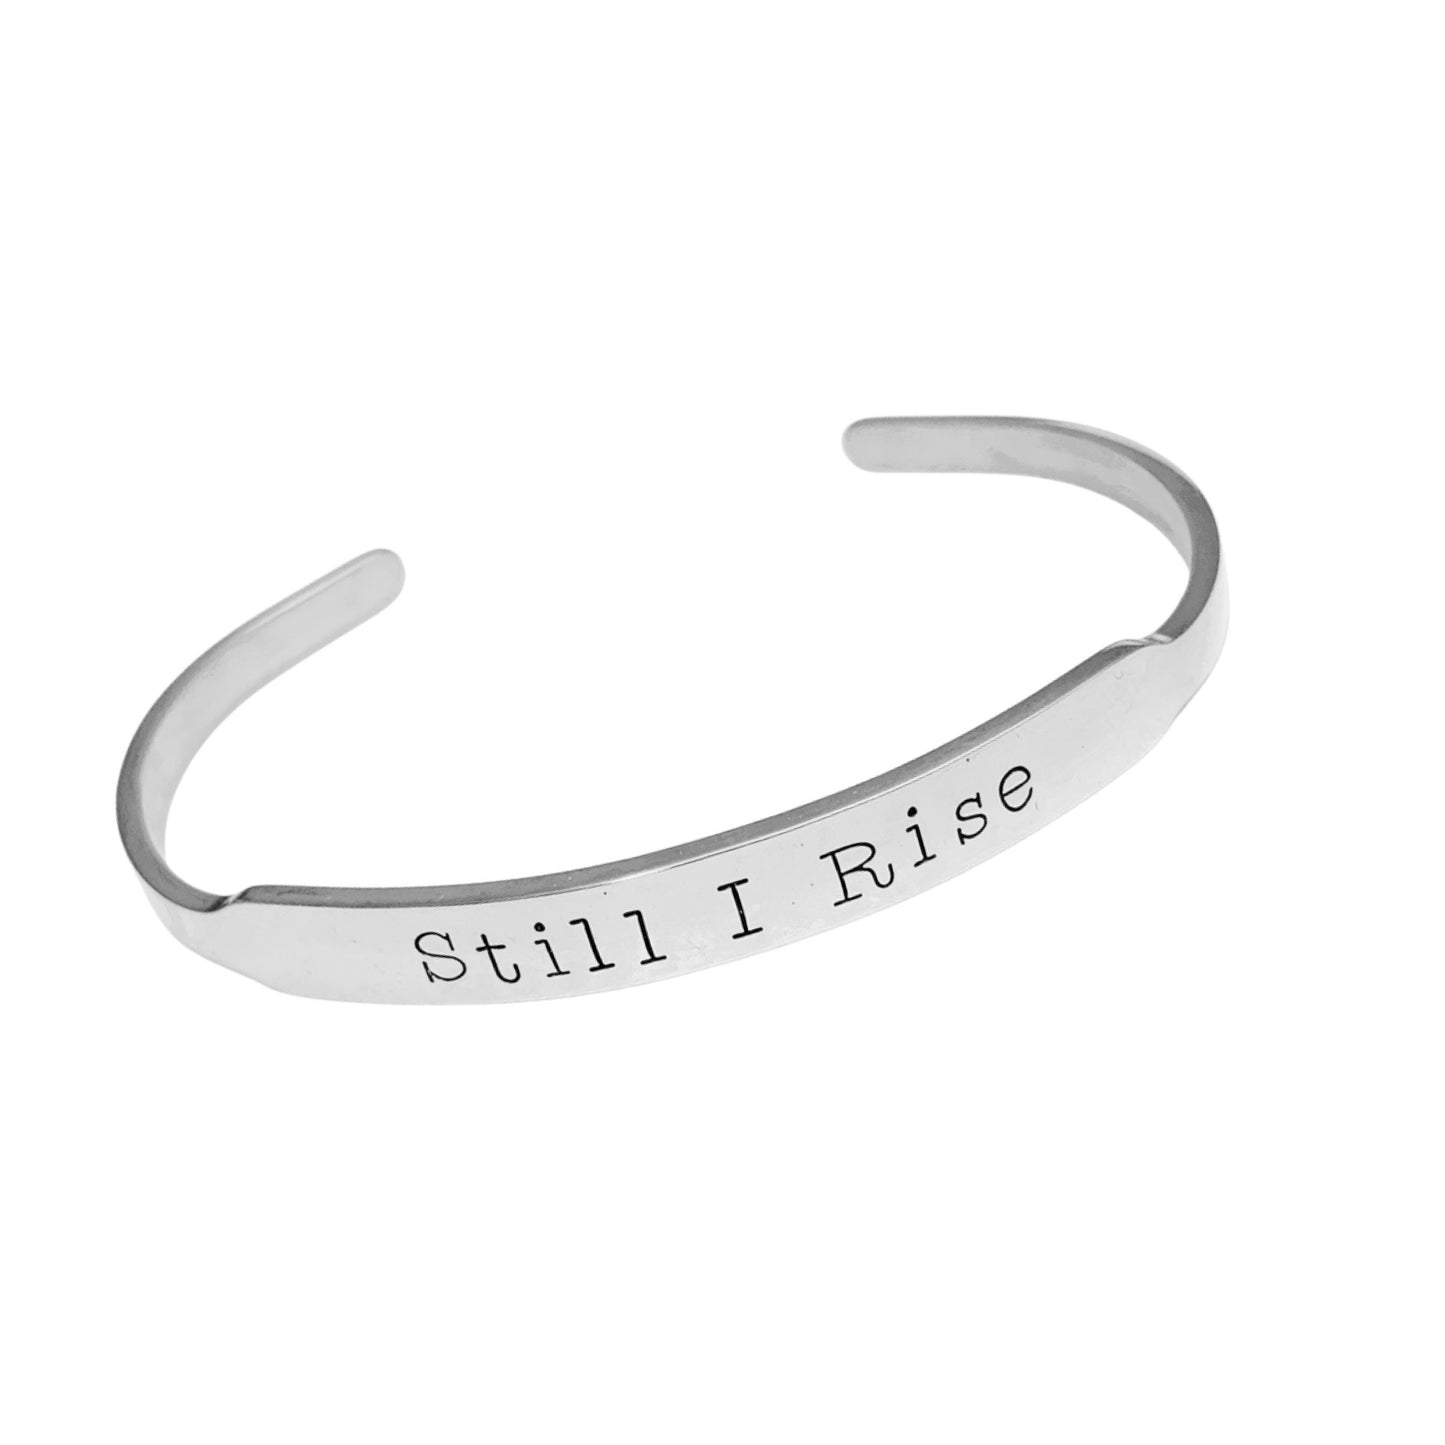 Still I Rise - Banner Cuff Bracelet